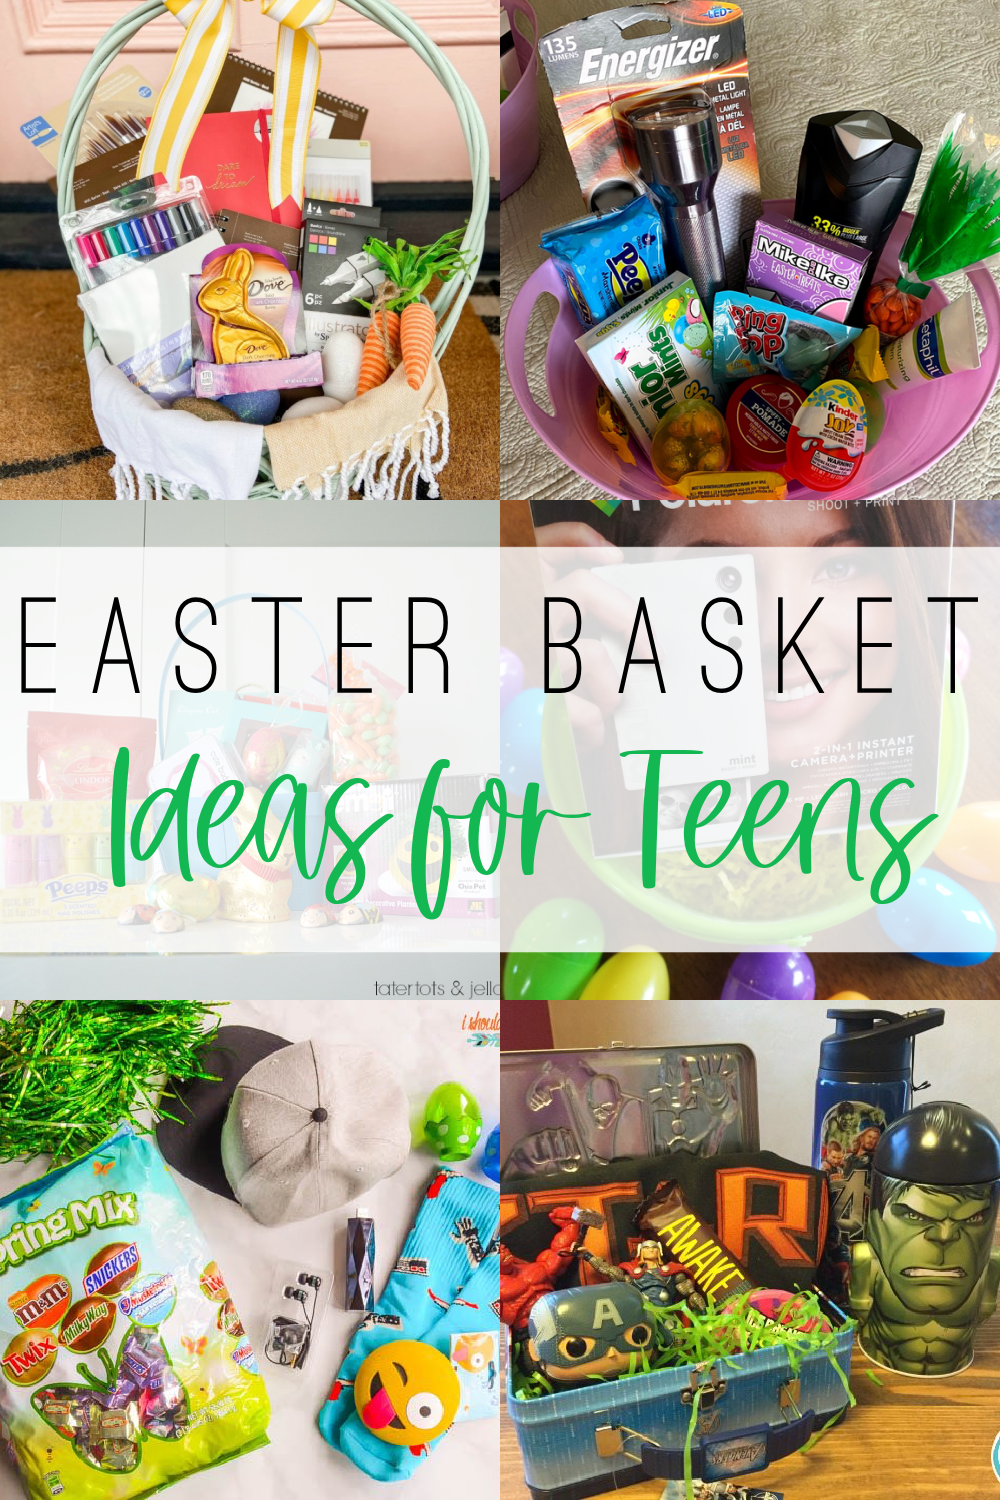 Fun Easter Basket Ideas for Teens via @resincraftsblog